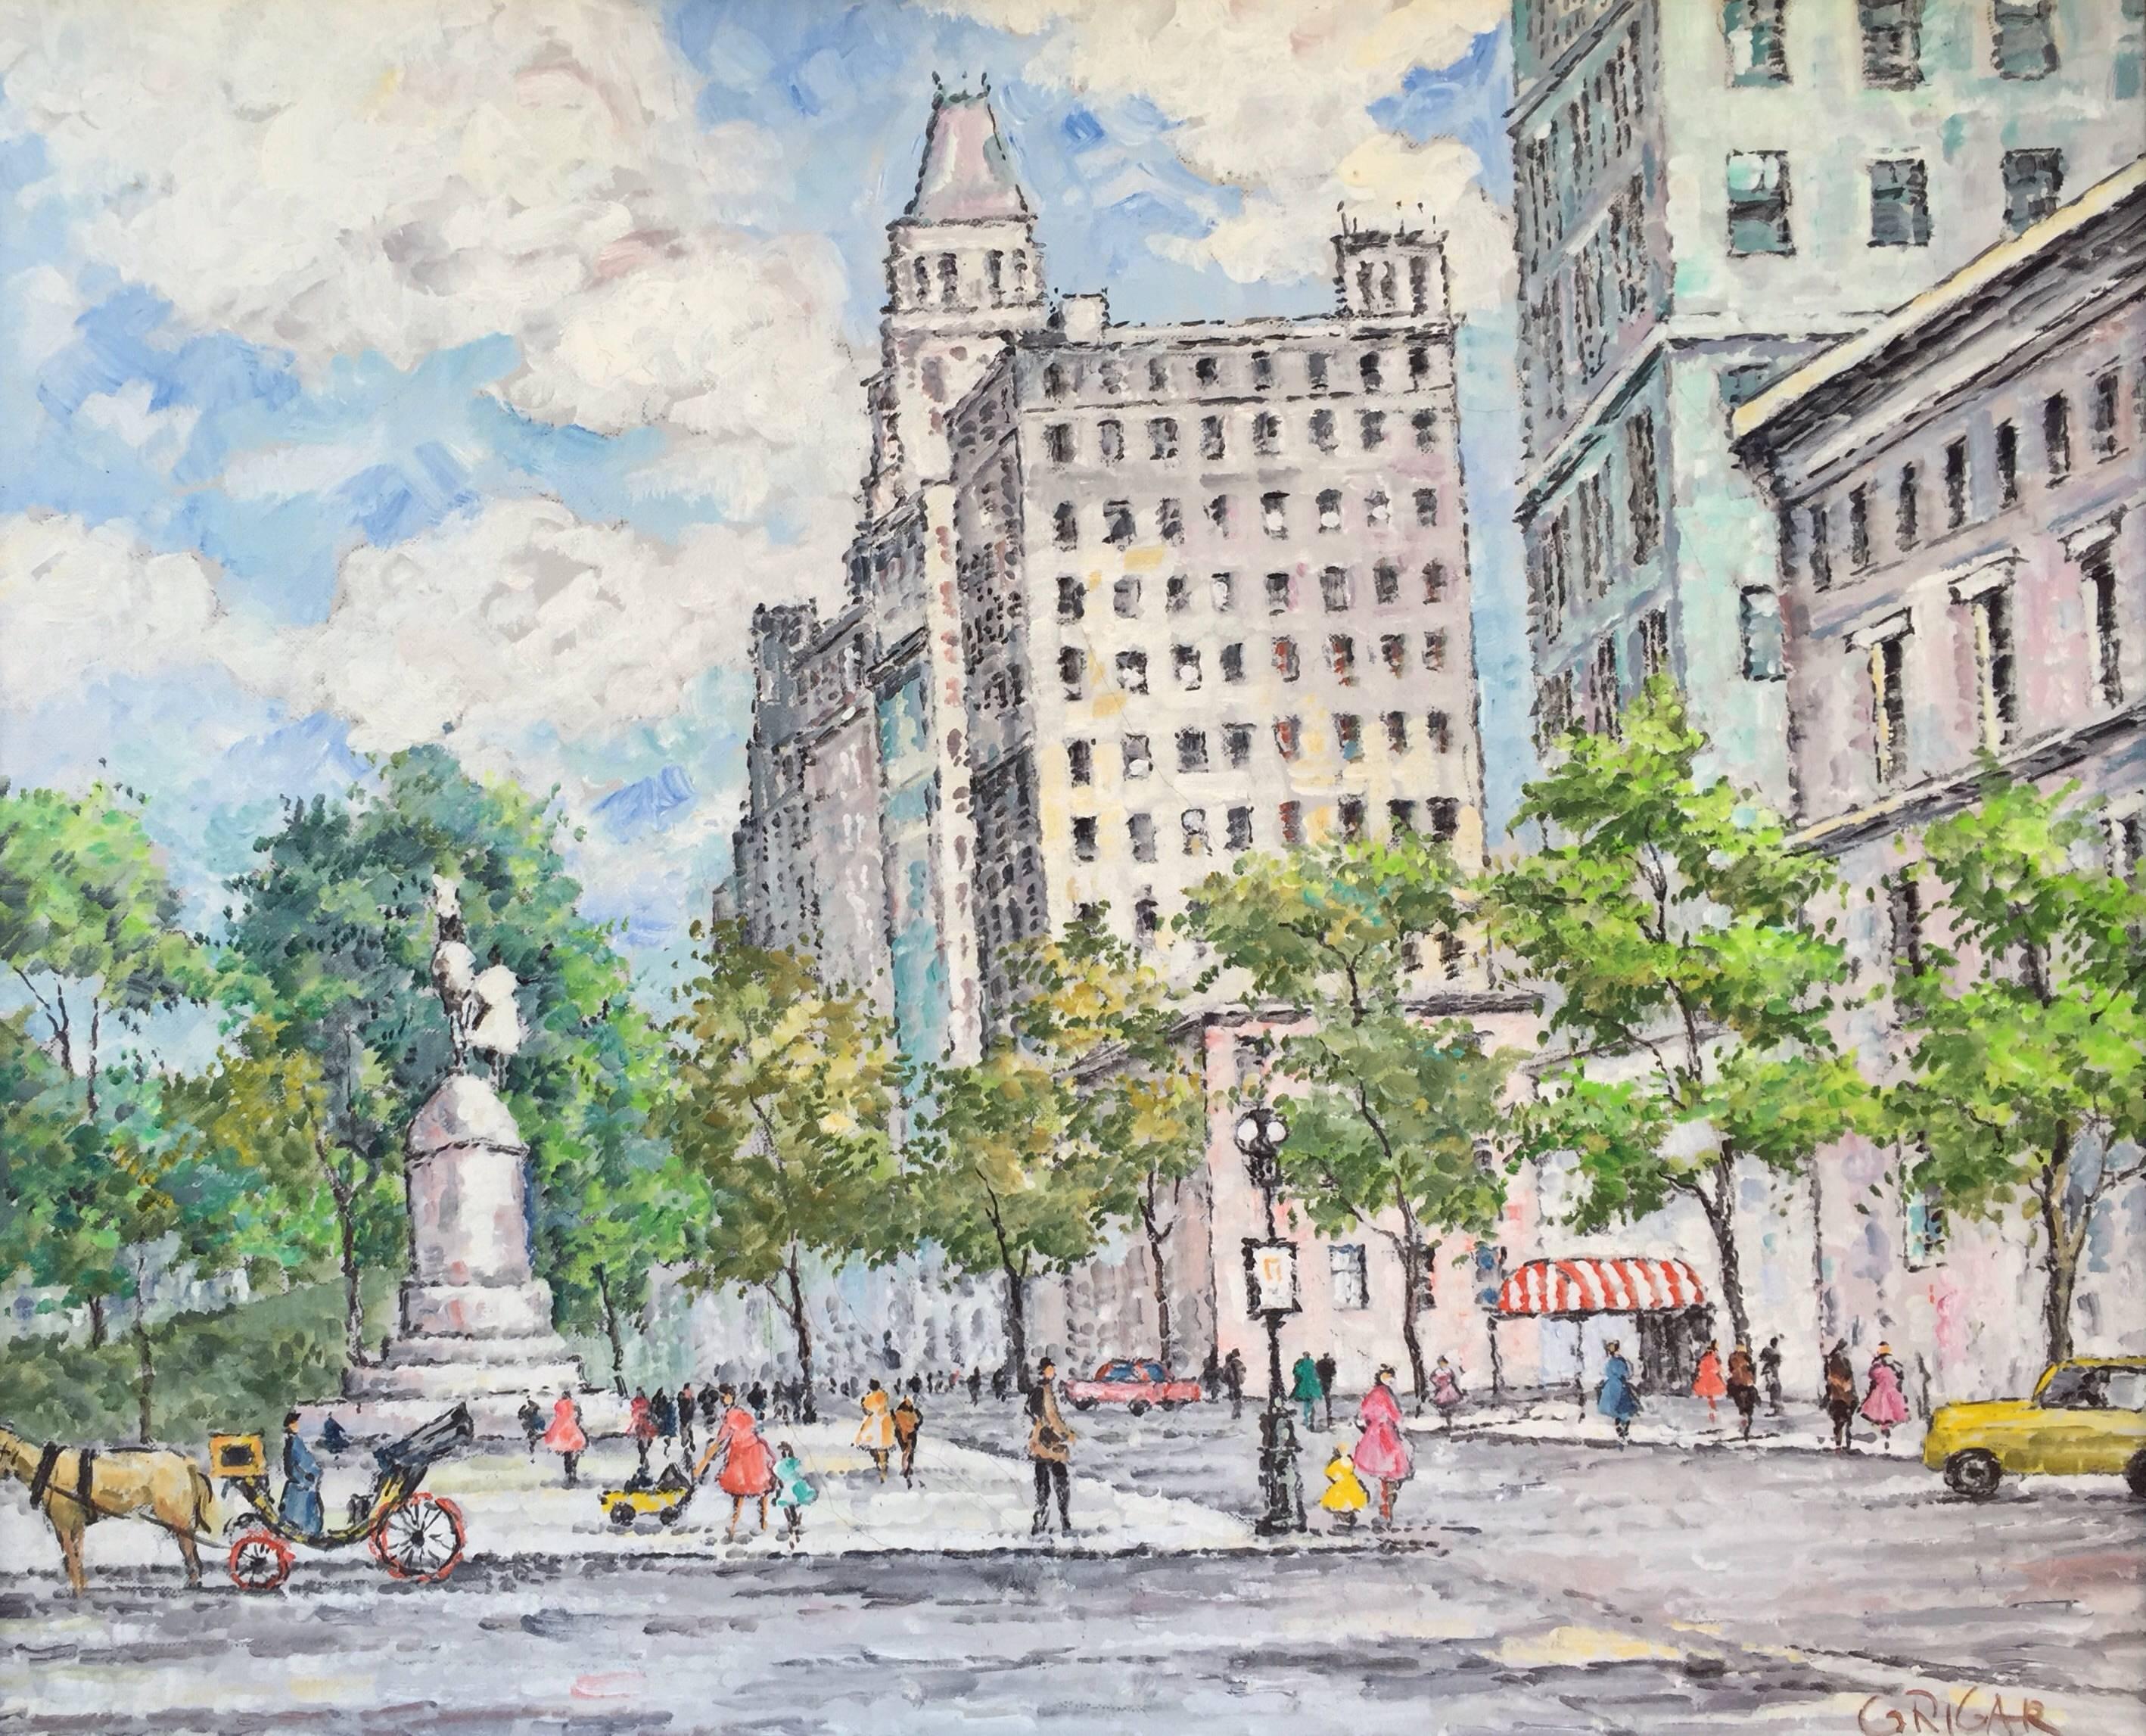 Ota Grigar Figurative Painting - "Plaza, New York City"